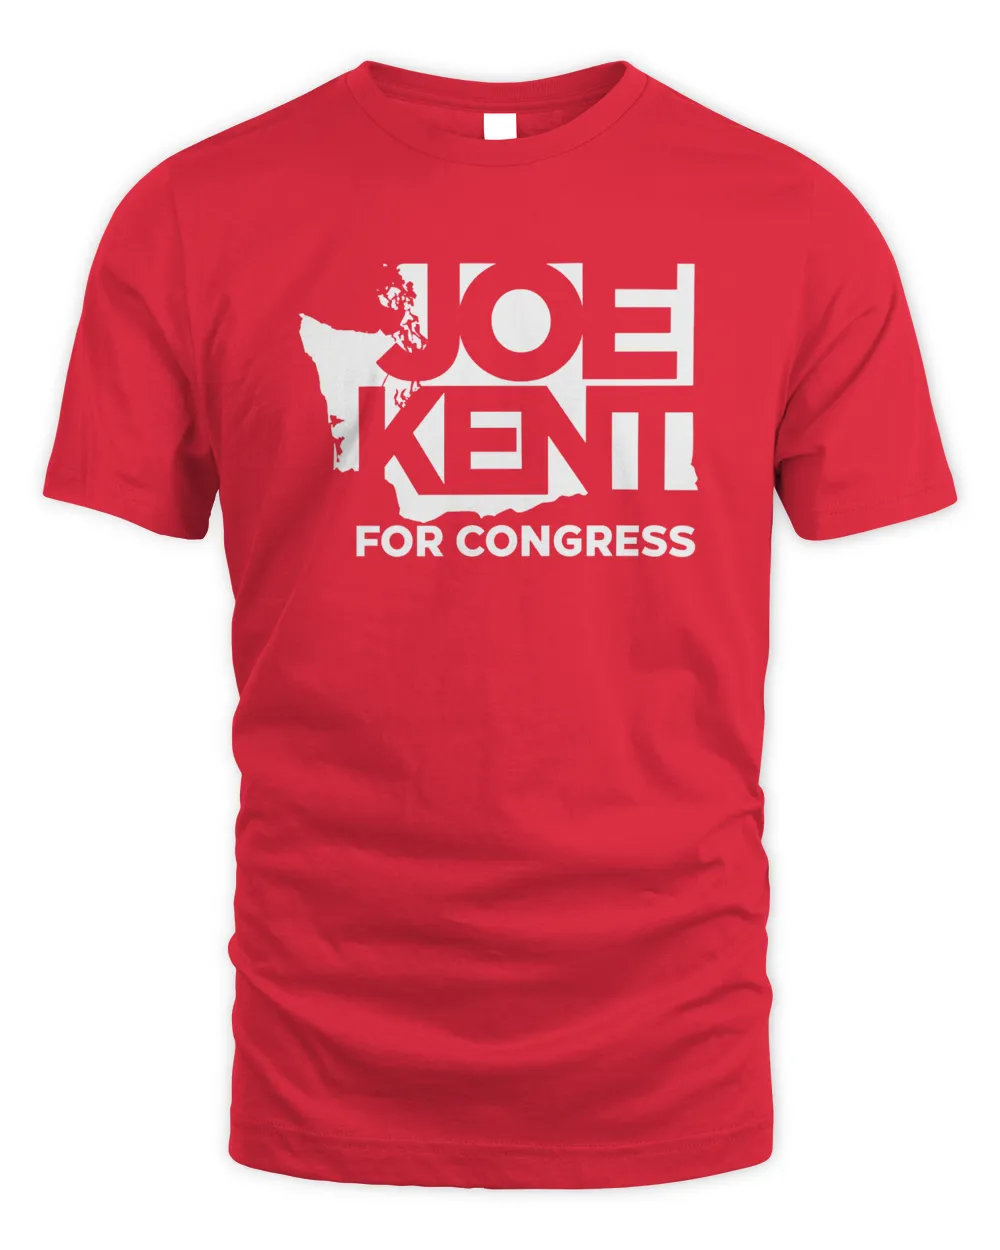 Joe Kent For Congress  Tee